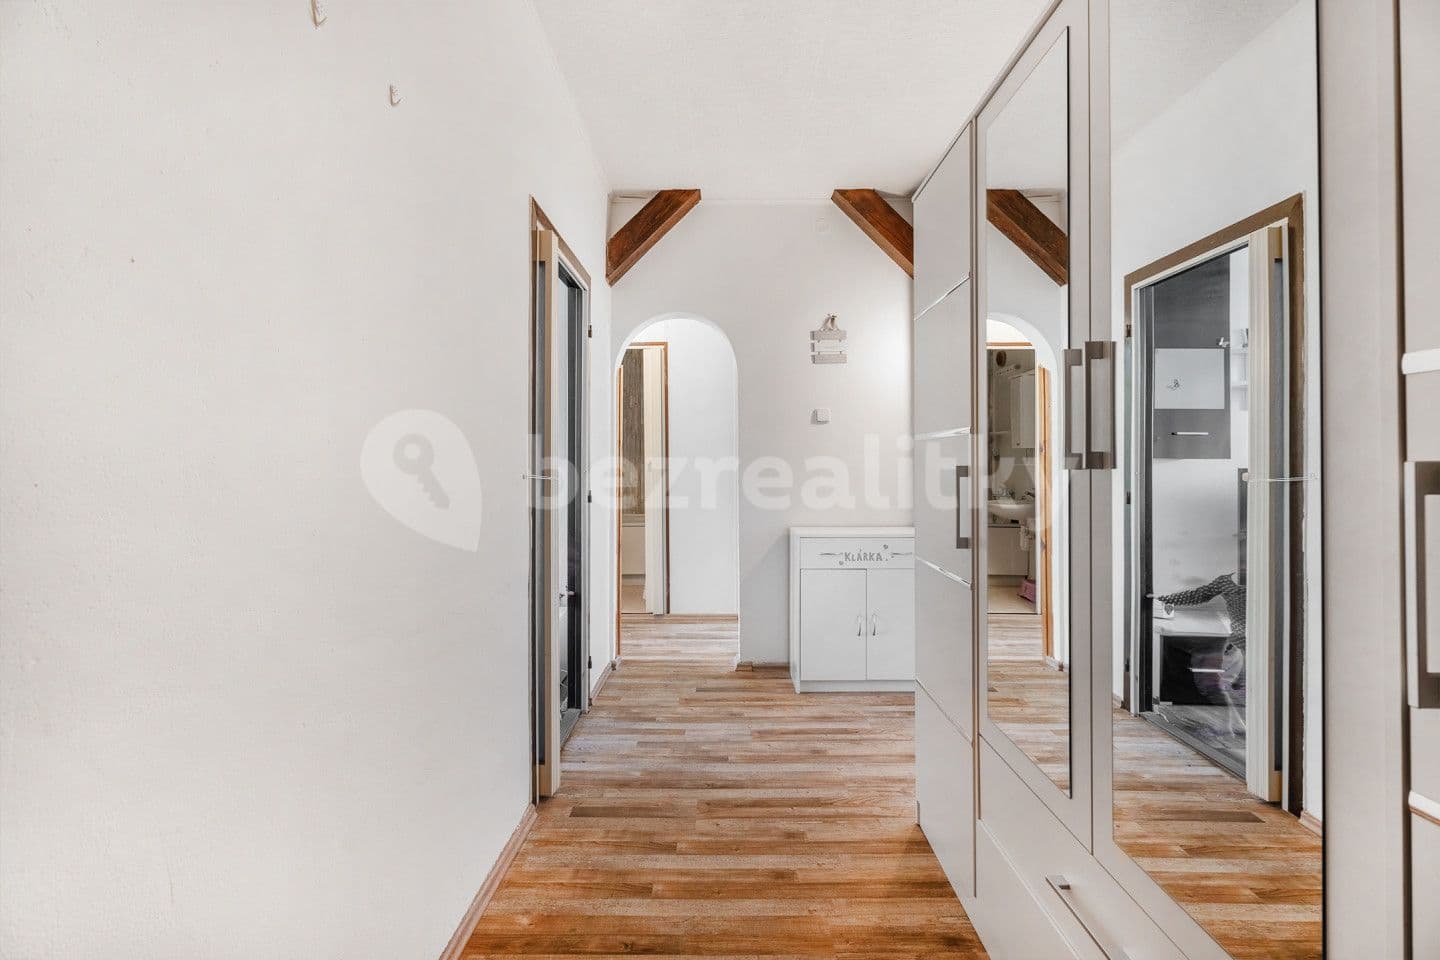 3 bedroom flat for sale, 70 m², Polní, Rumburk, Ústecký Region